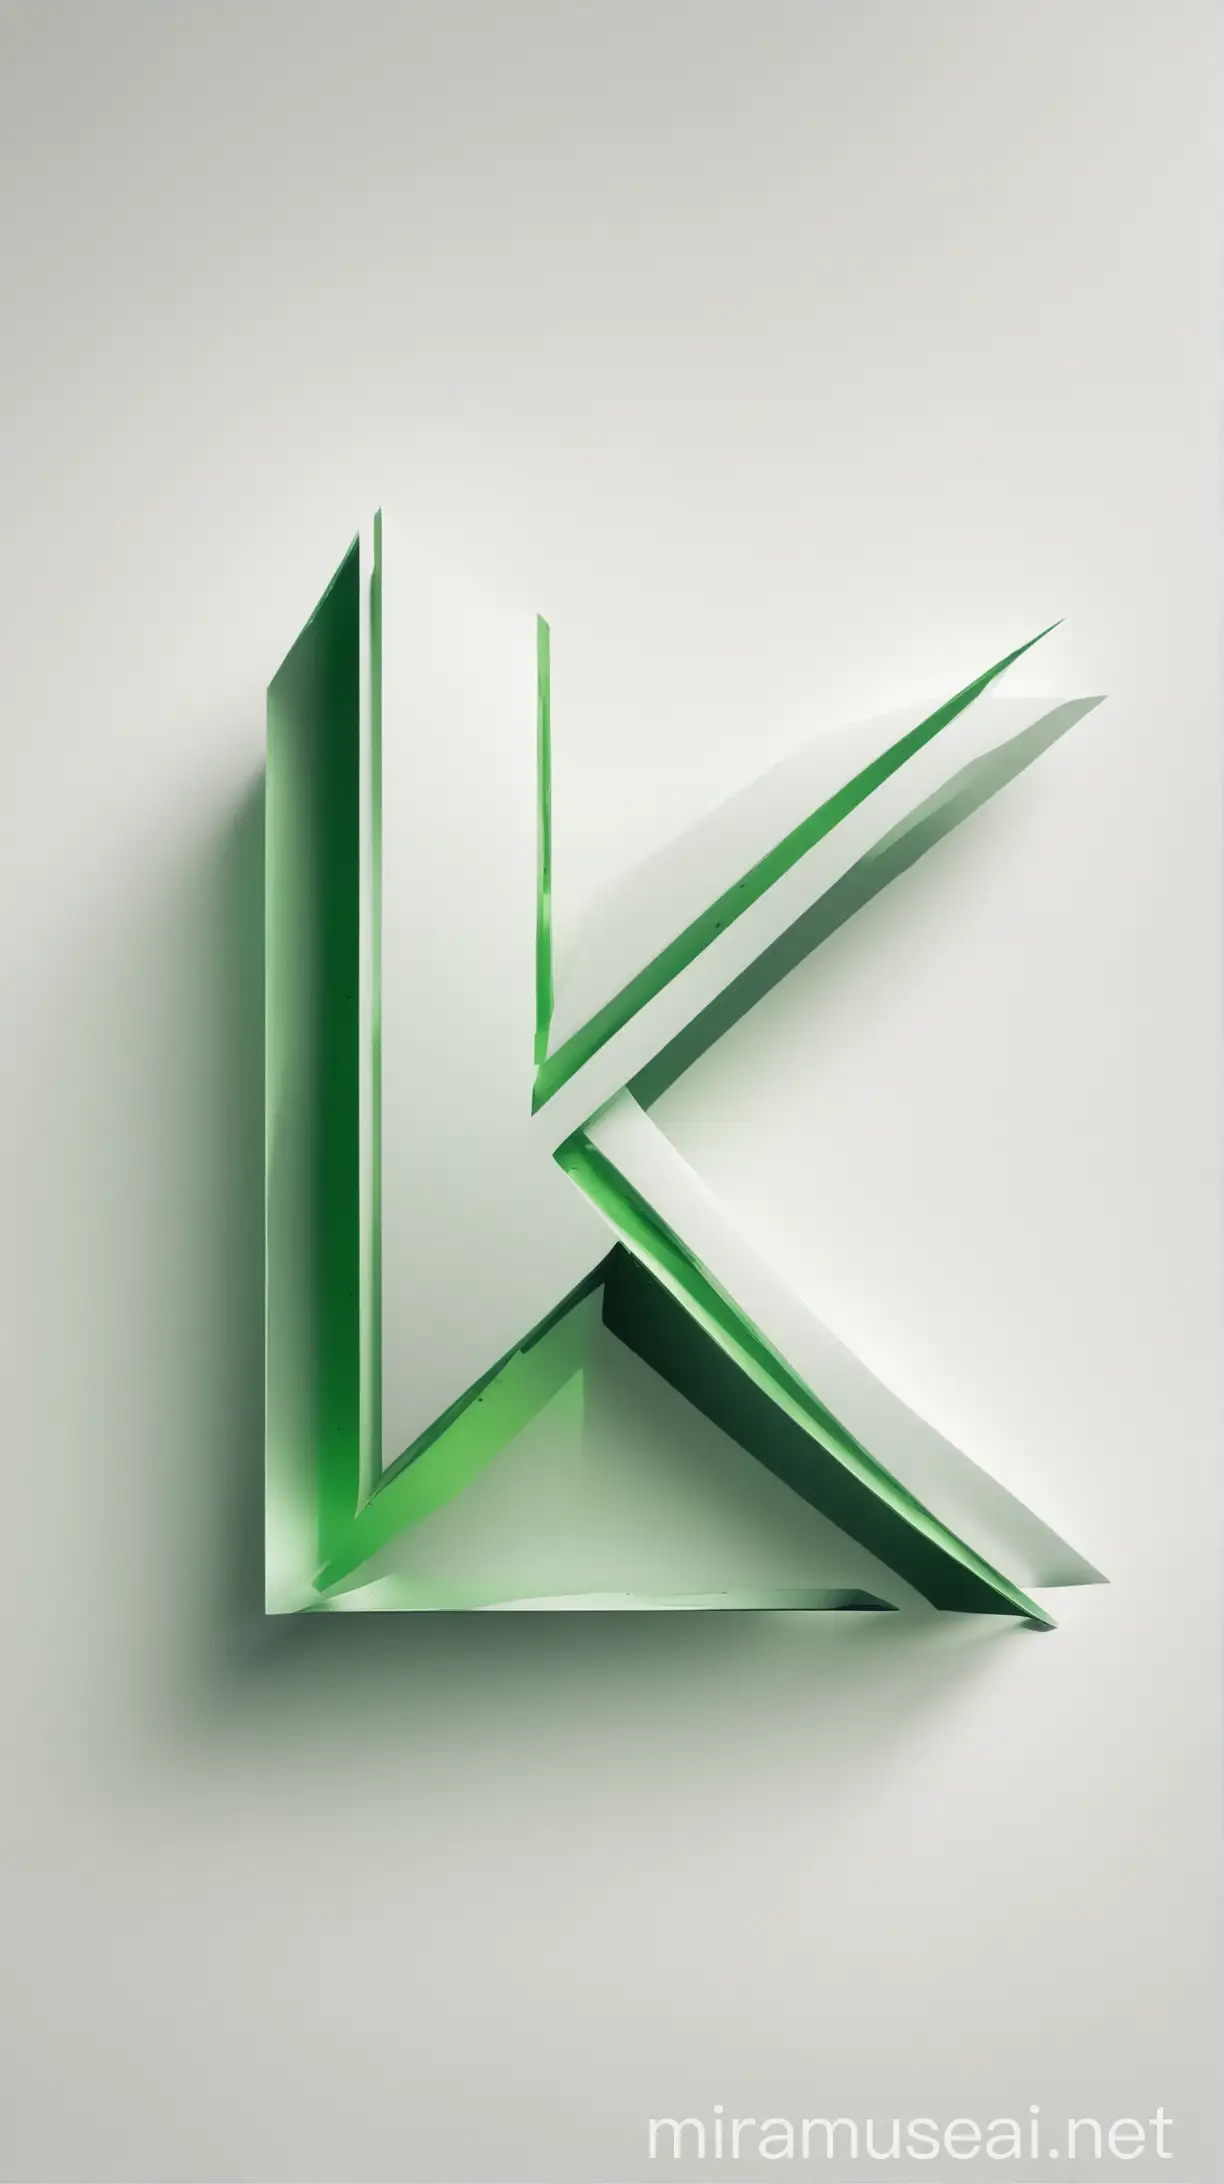 Vibrant Cyber Green K Logo on Clean White Background